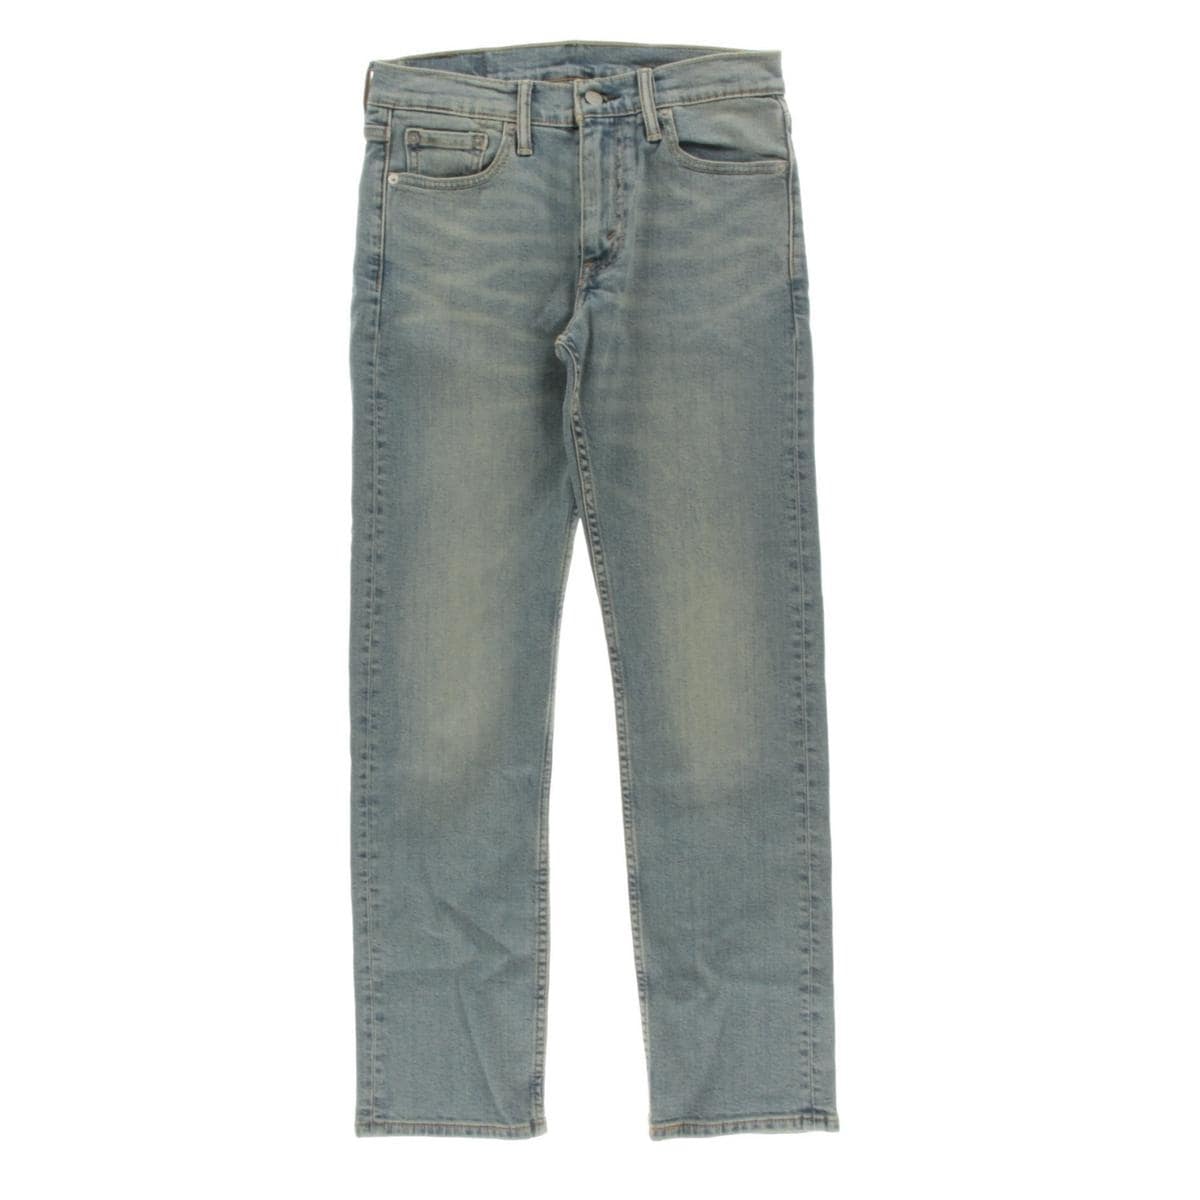 28 length jeans mens